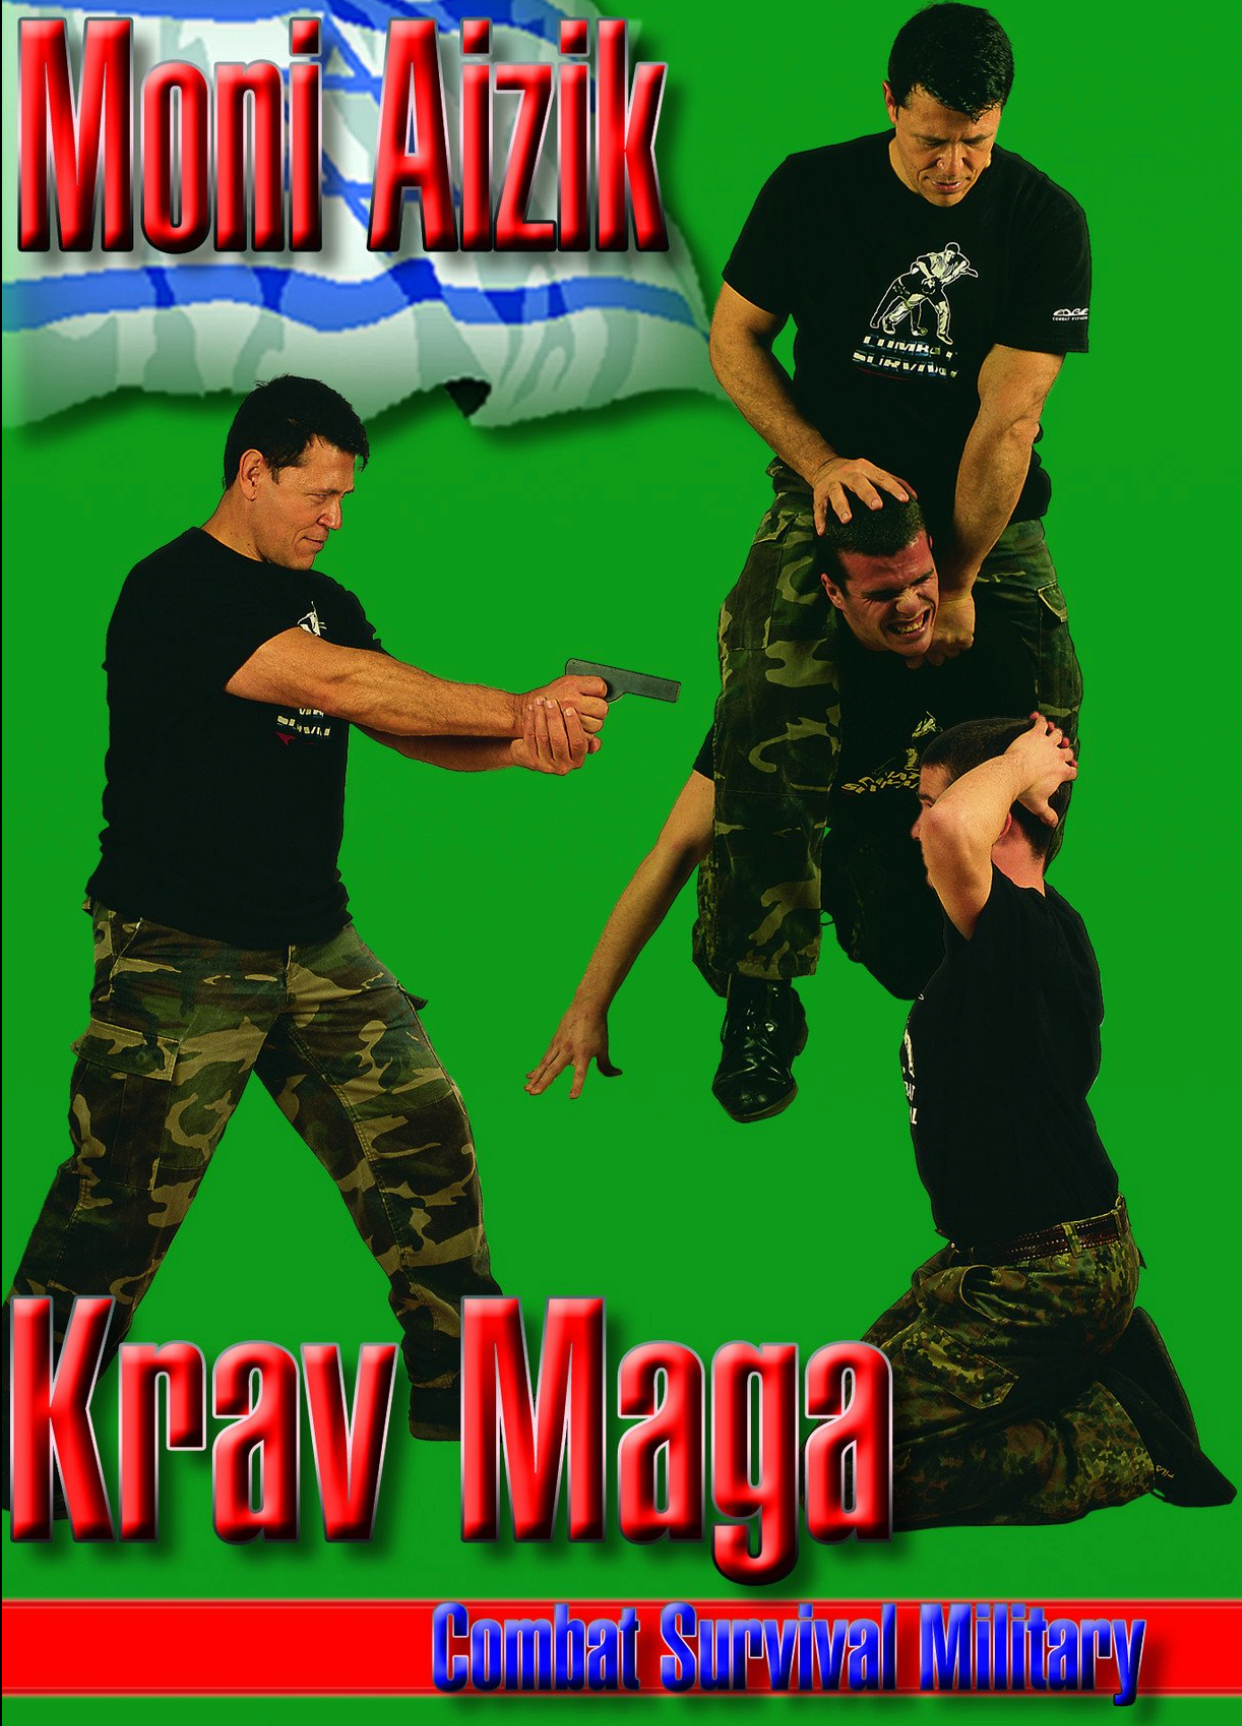 Krav Maga: Miltary Combat Survival DVD with Moni Aizik - Budovideos Inc